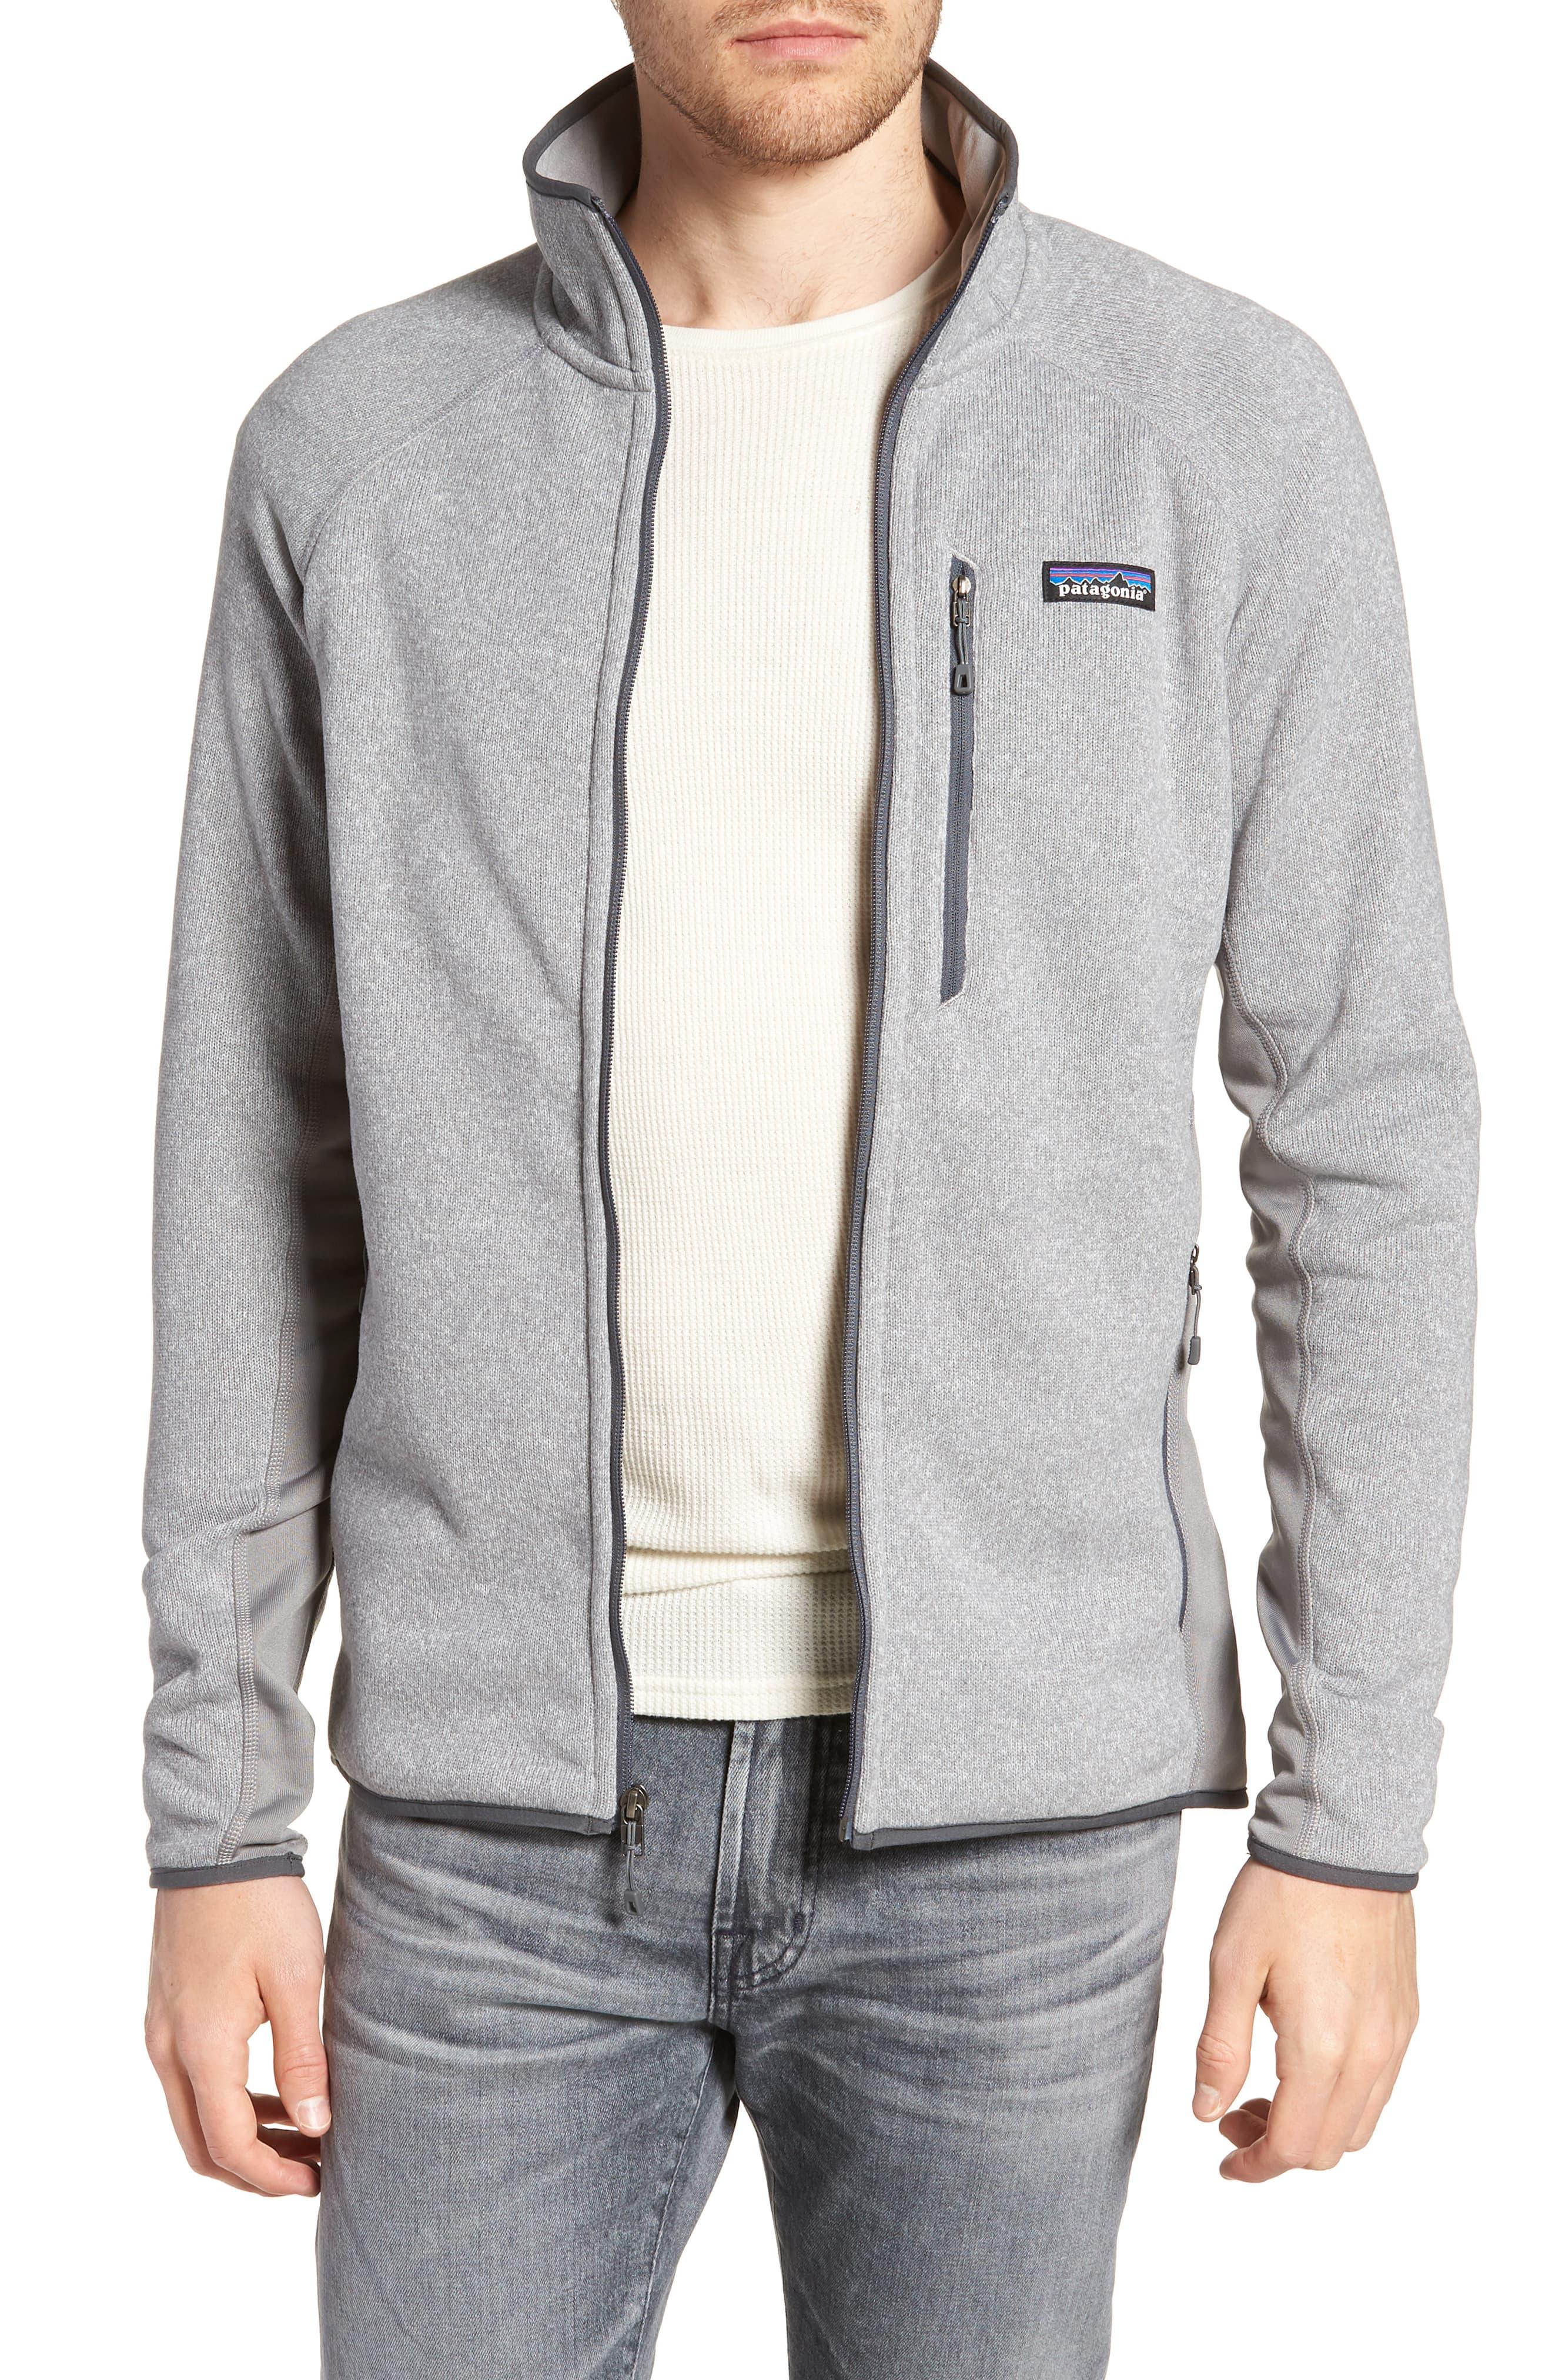 Patagonia Fleece Better Sweater Performance Slim Fit Zip Jacket in Gray ...